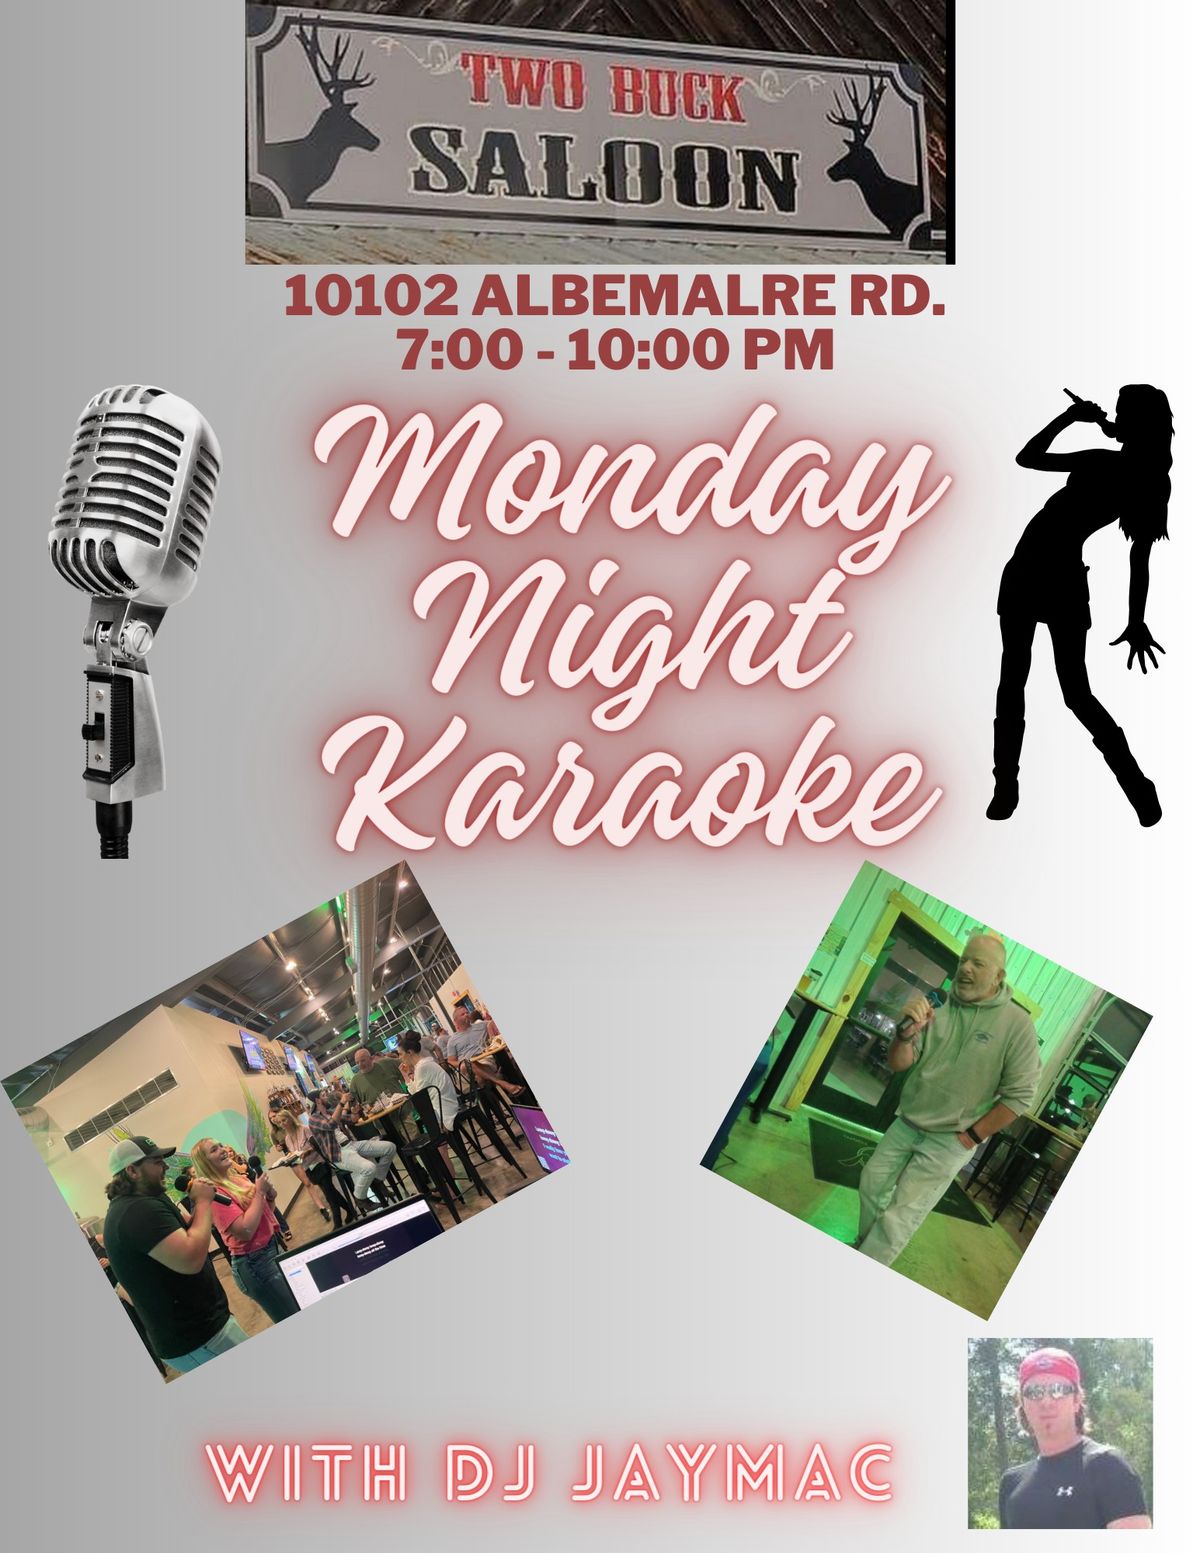 Monday Night Karaoke at The Two Buck Saloon 10102 Albemarle Rd. Charlotte, NC